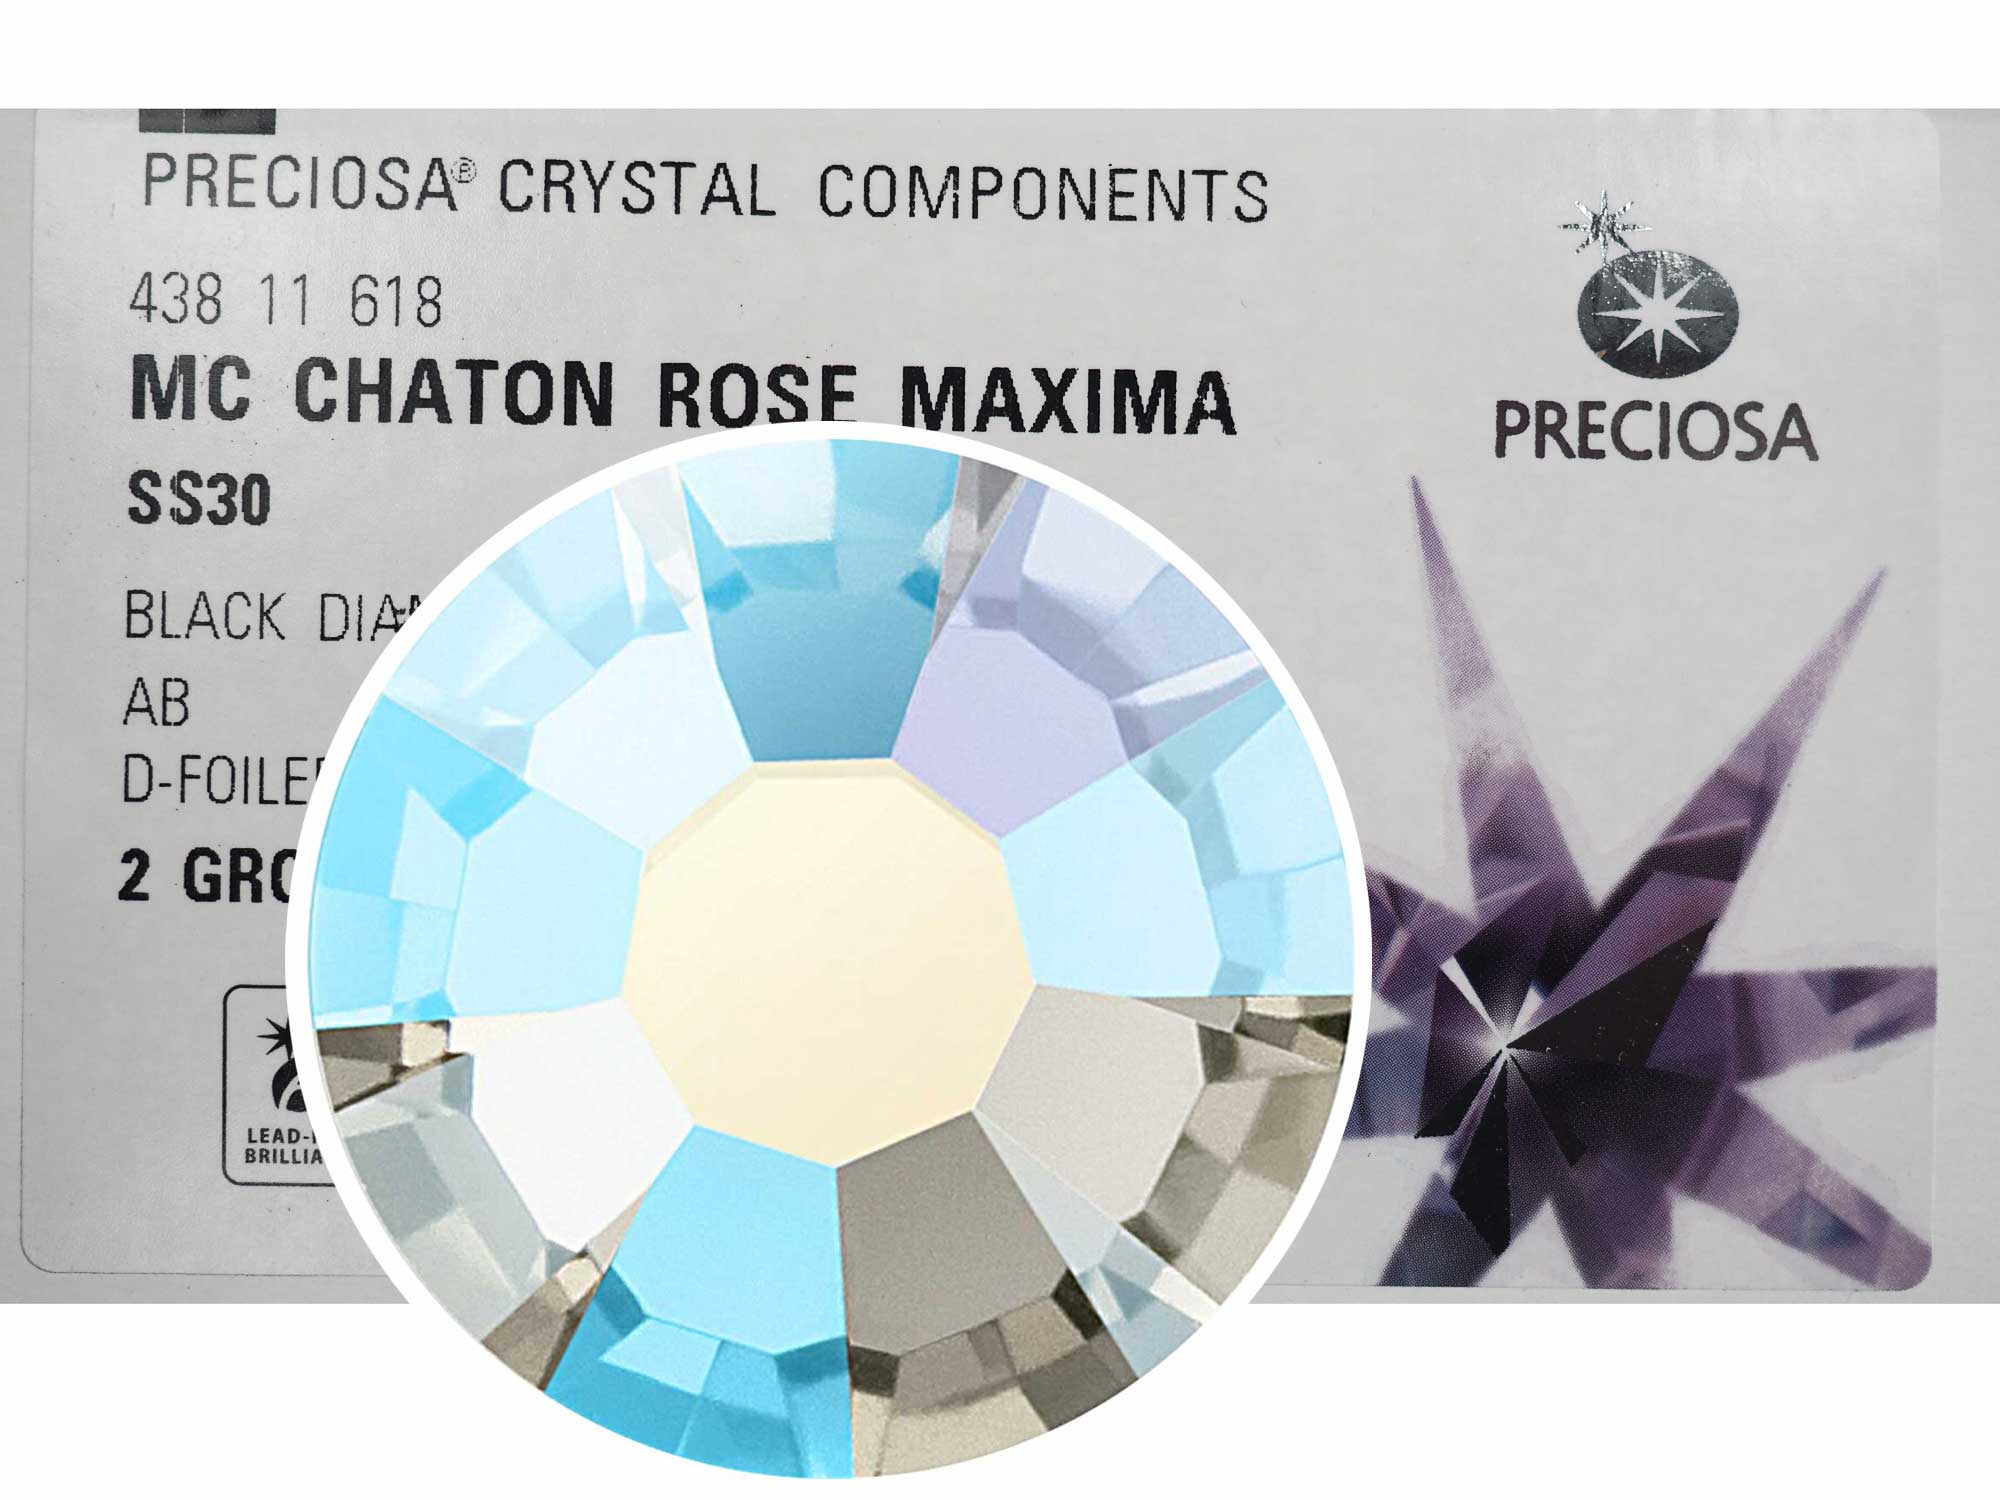 Black Diamond AB, Preciosa VIVA or MAXIMA Chaton Roses (Rhinestone Flatbacks), Genuine Czech Crystals, grey coated with Aurora Borealis